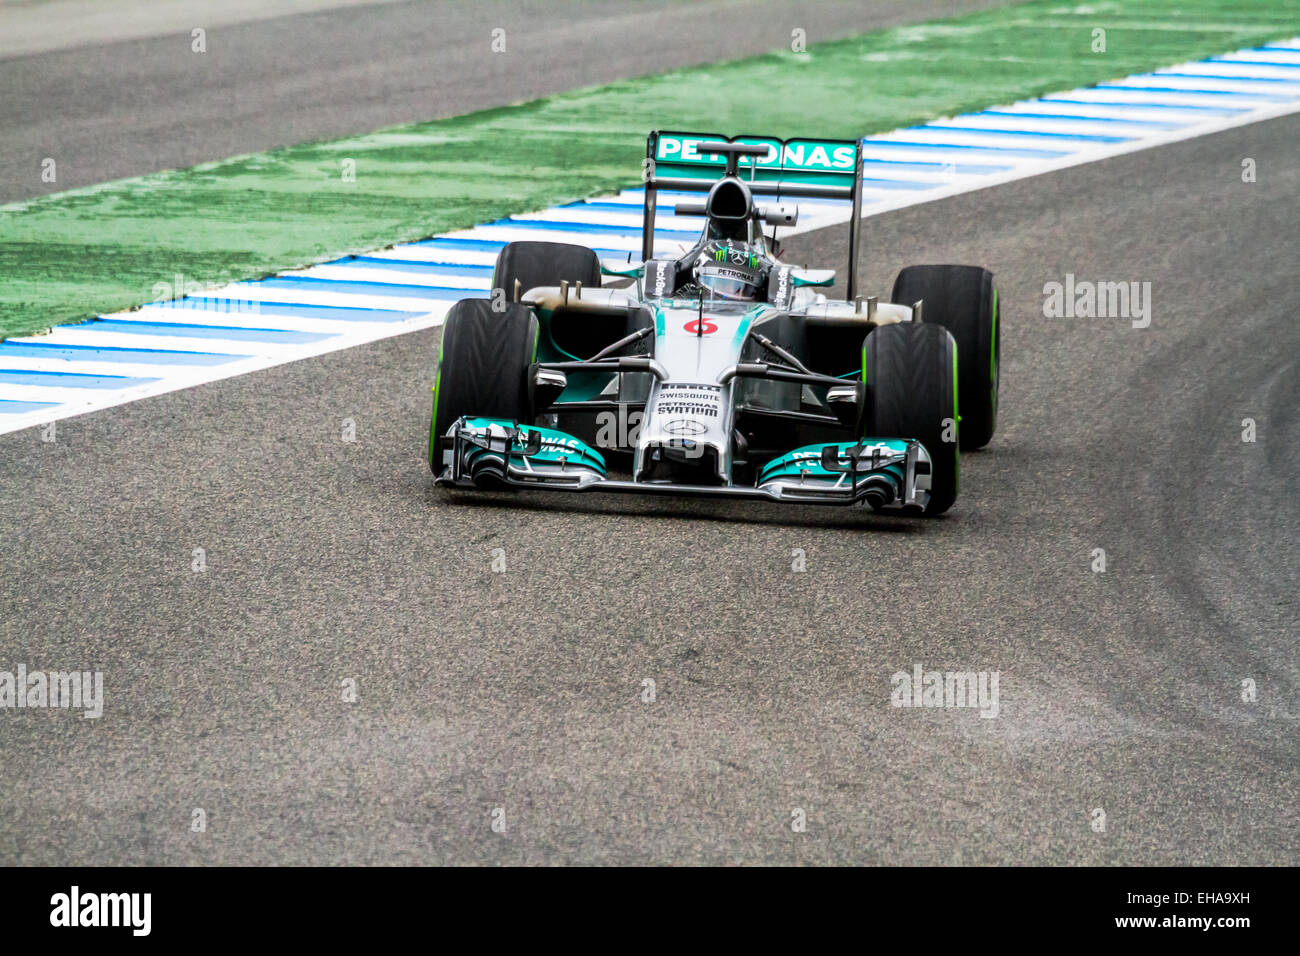 JEREZ DE LA FRONTERA, SPAIN - JAN 31: Nico Rosberg of Mercedes F1 races on training session on January 31 , 2014 Stock Photo